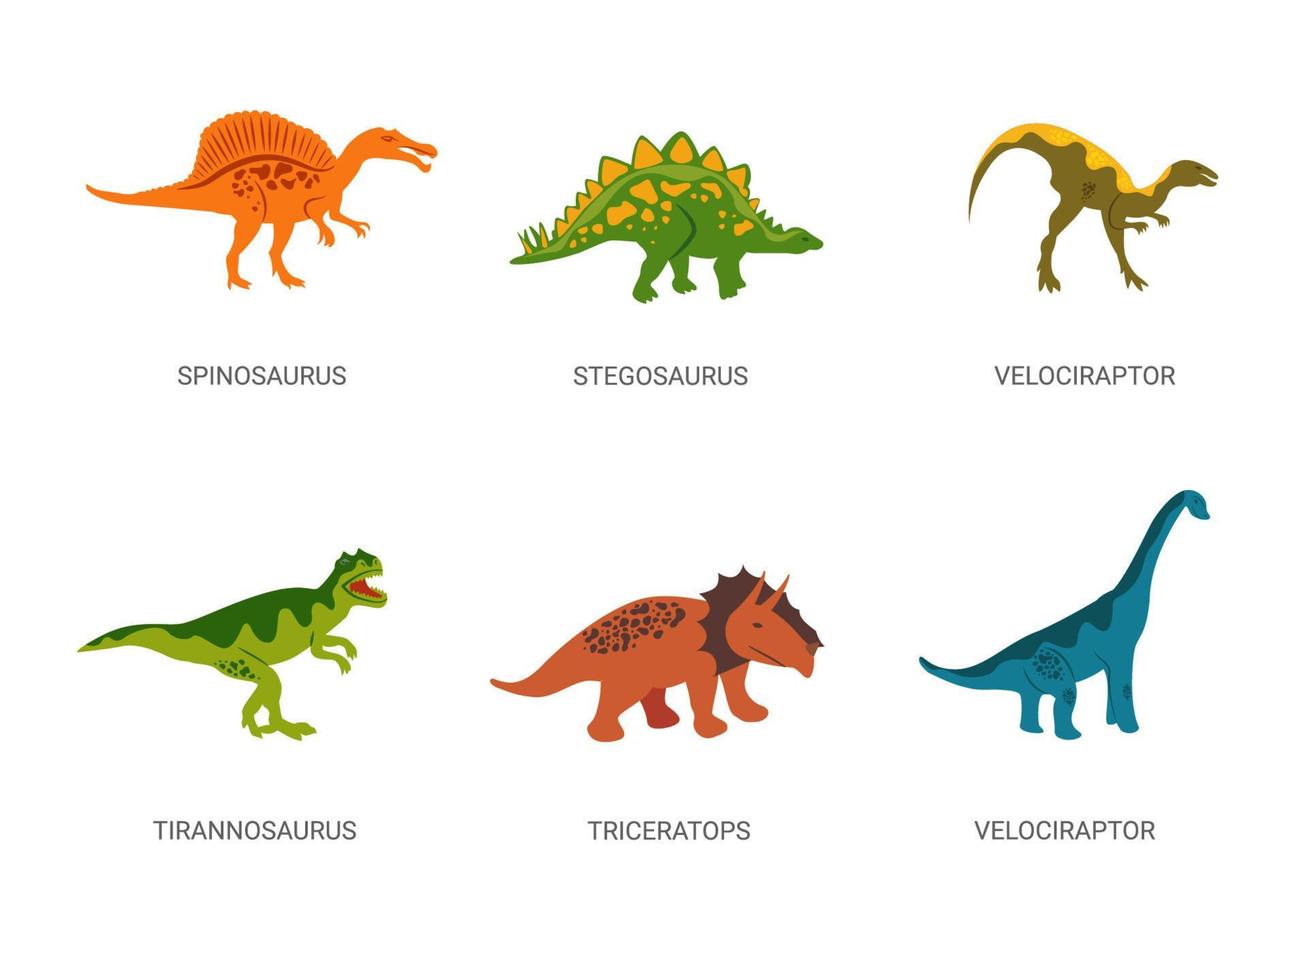 Dinosaurs from Jurassic period. Powerful red spinosaurus with green herbivorous stegosaurus. vector